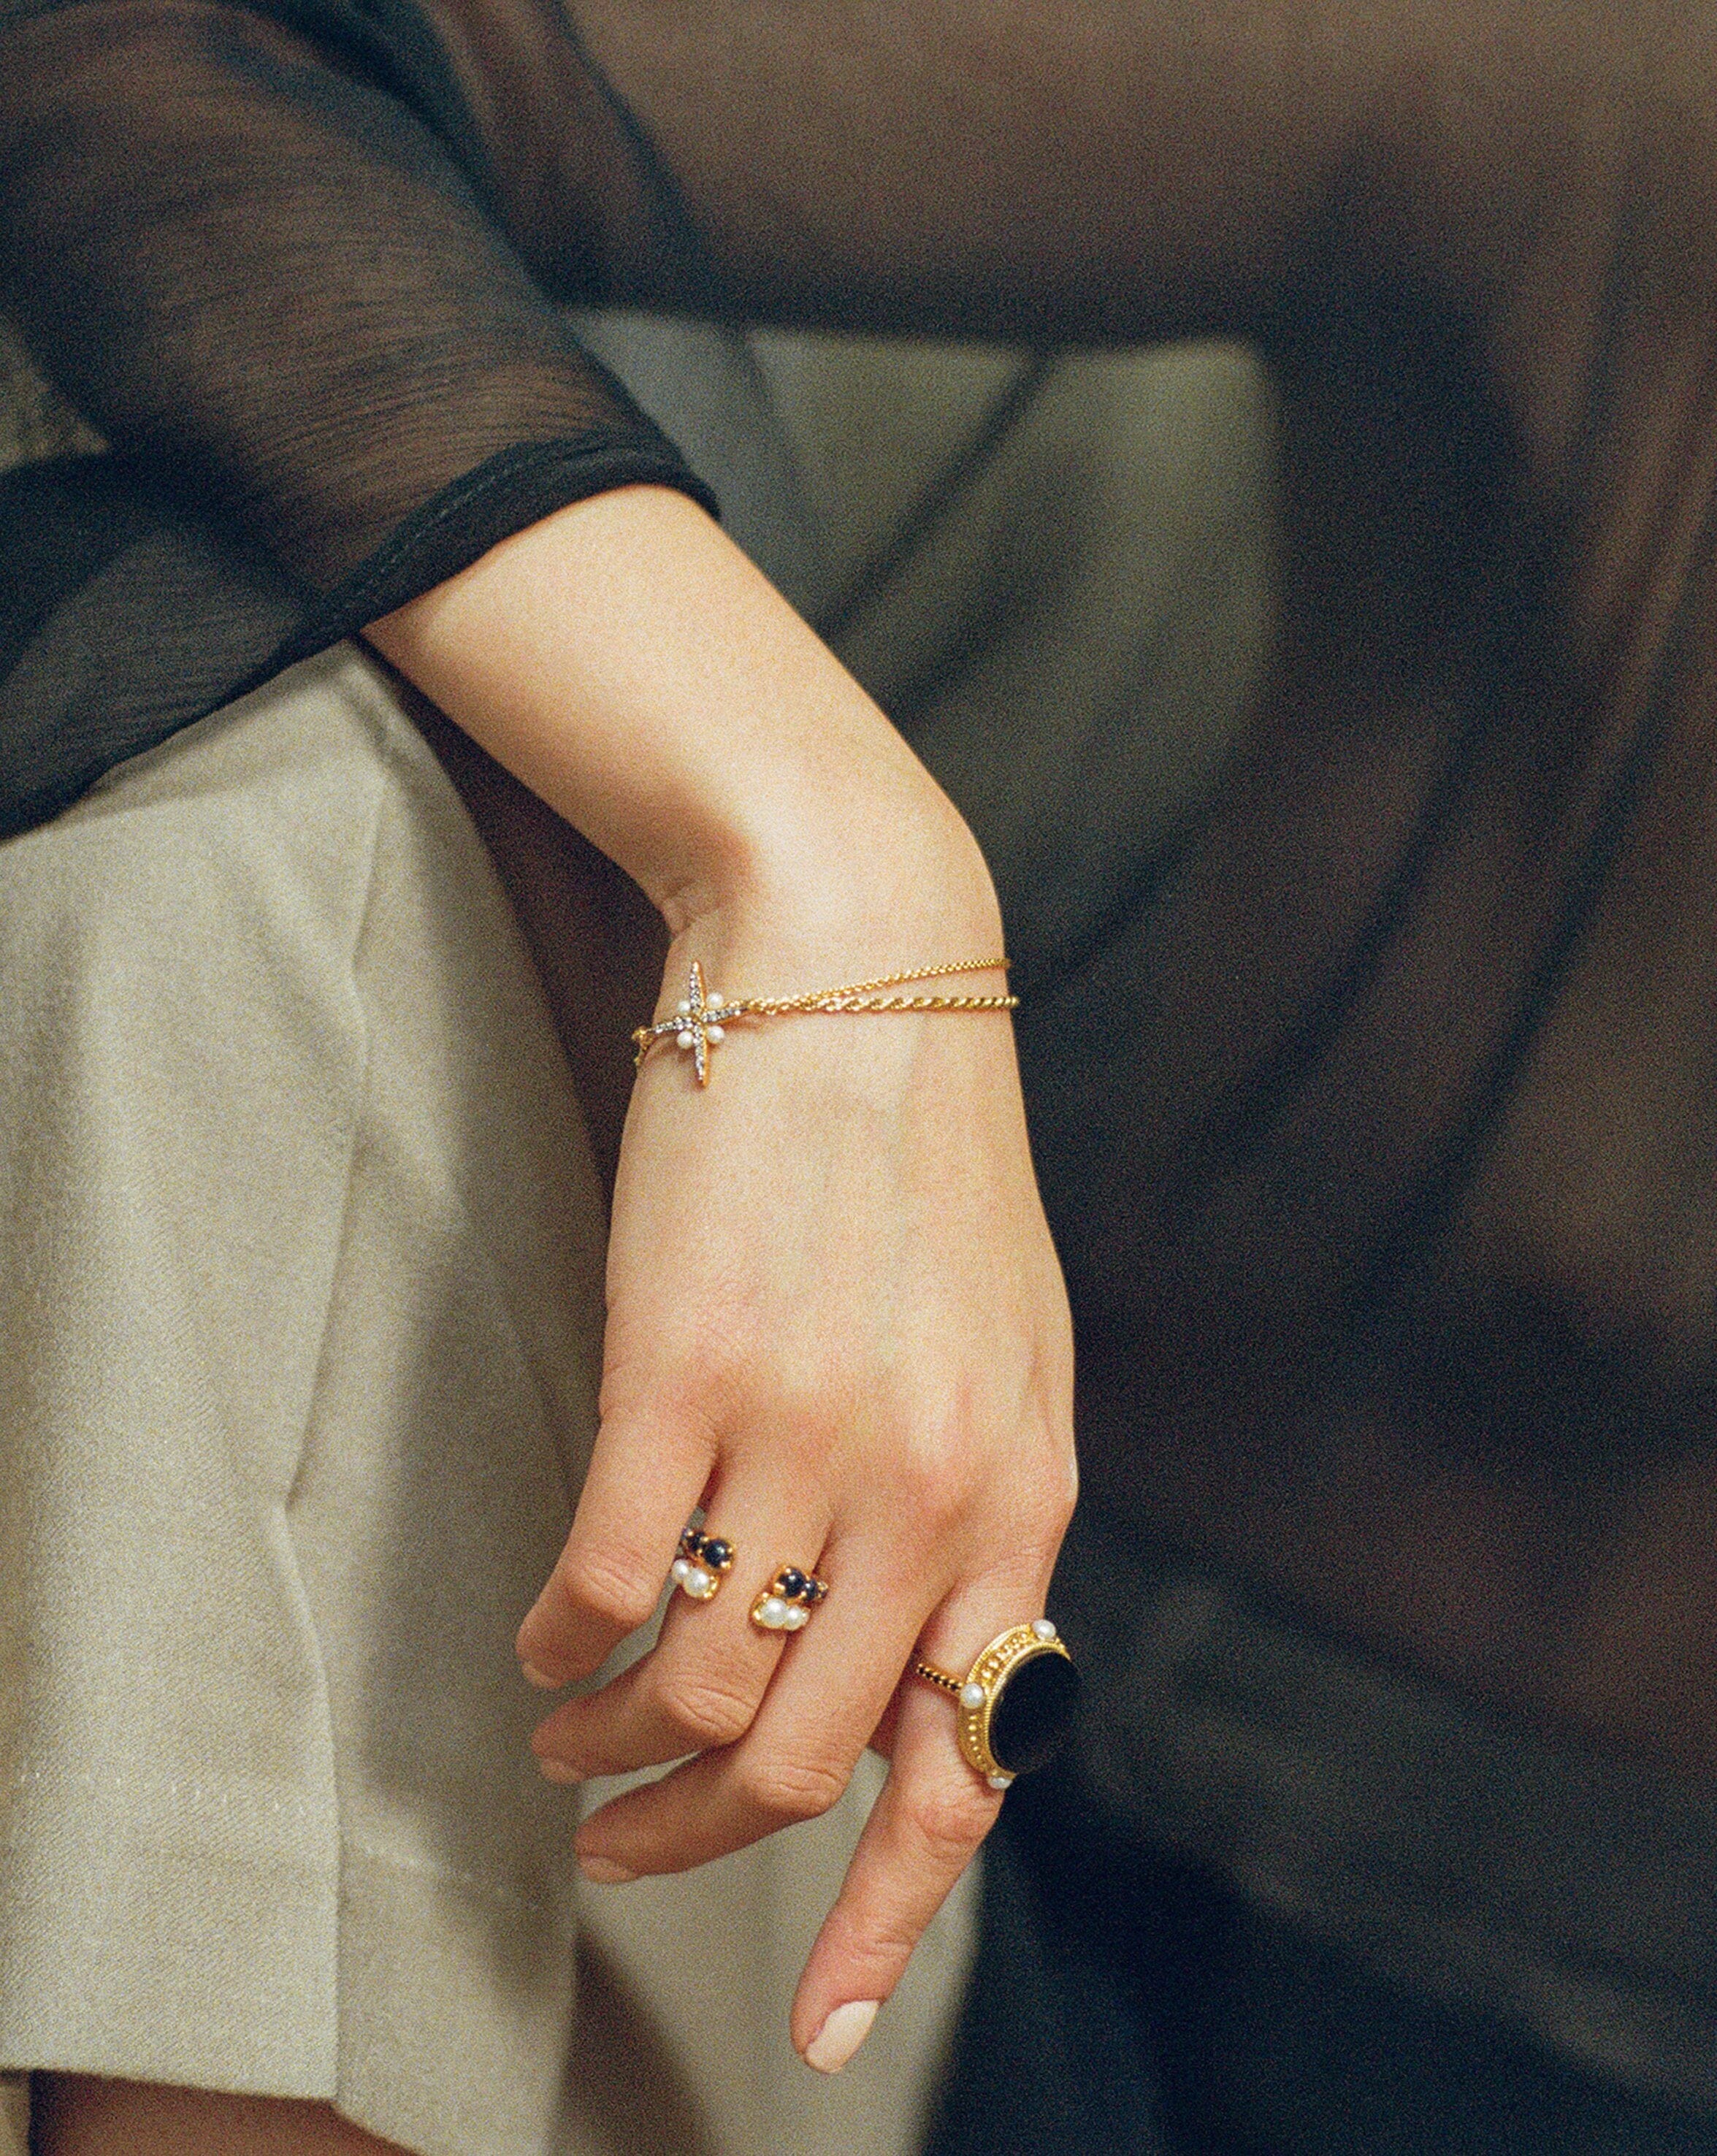 Harris Reed Pearl North Star Bracelet | 18ct Gold Plated Vermeil/Pearl Bracelets Missoma 